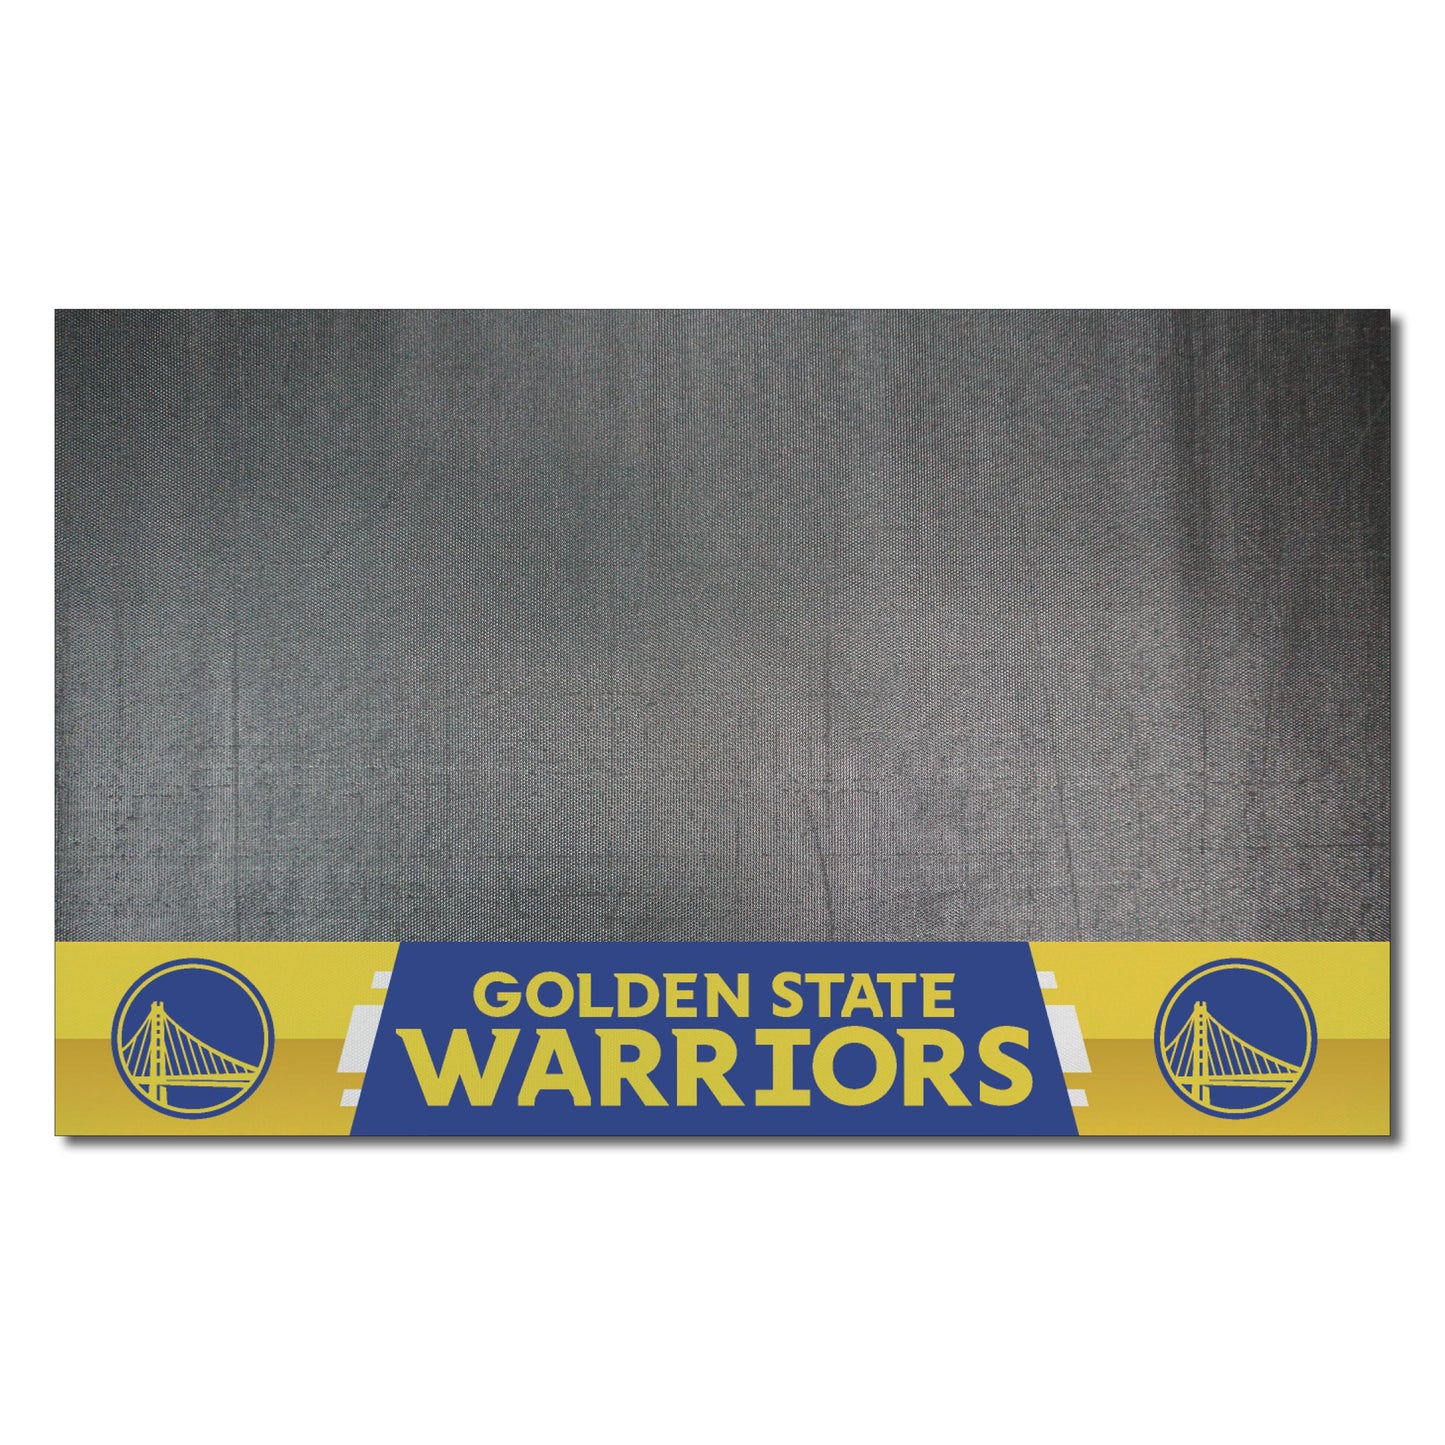 Golden State Warriors Vinyl Grill Mat - 26in. x 42in. - "Circular Golden Gate" Logo & "Golden State Warriors" Wordmark